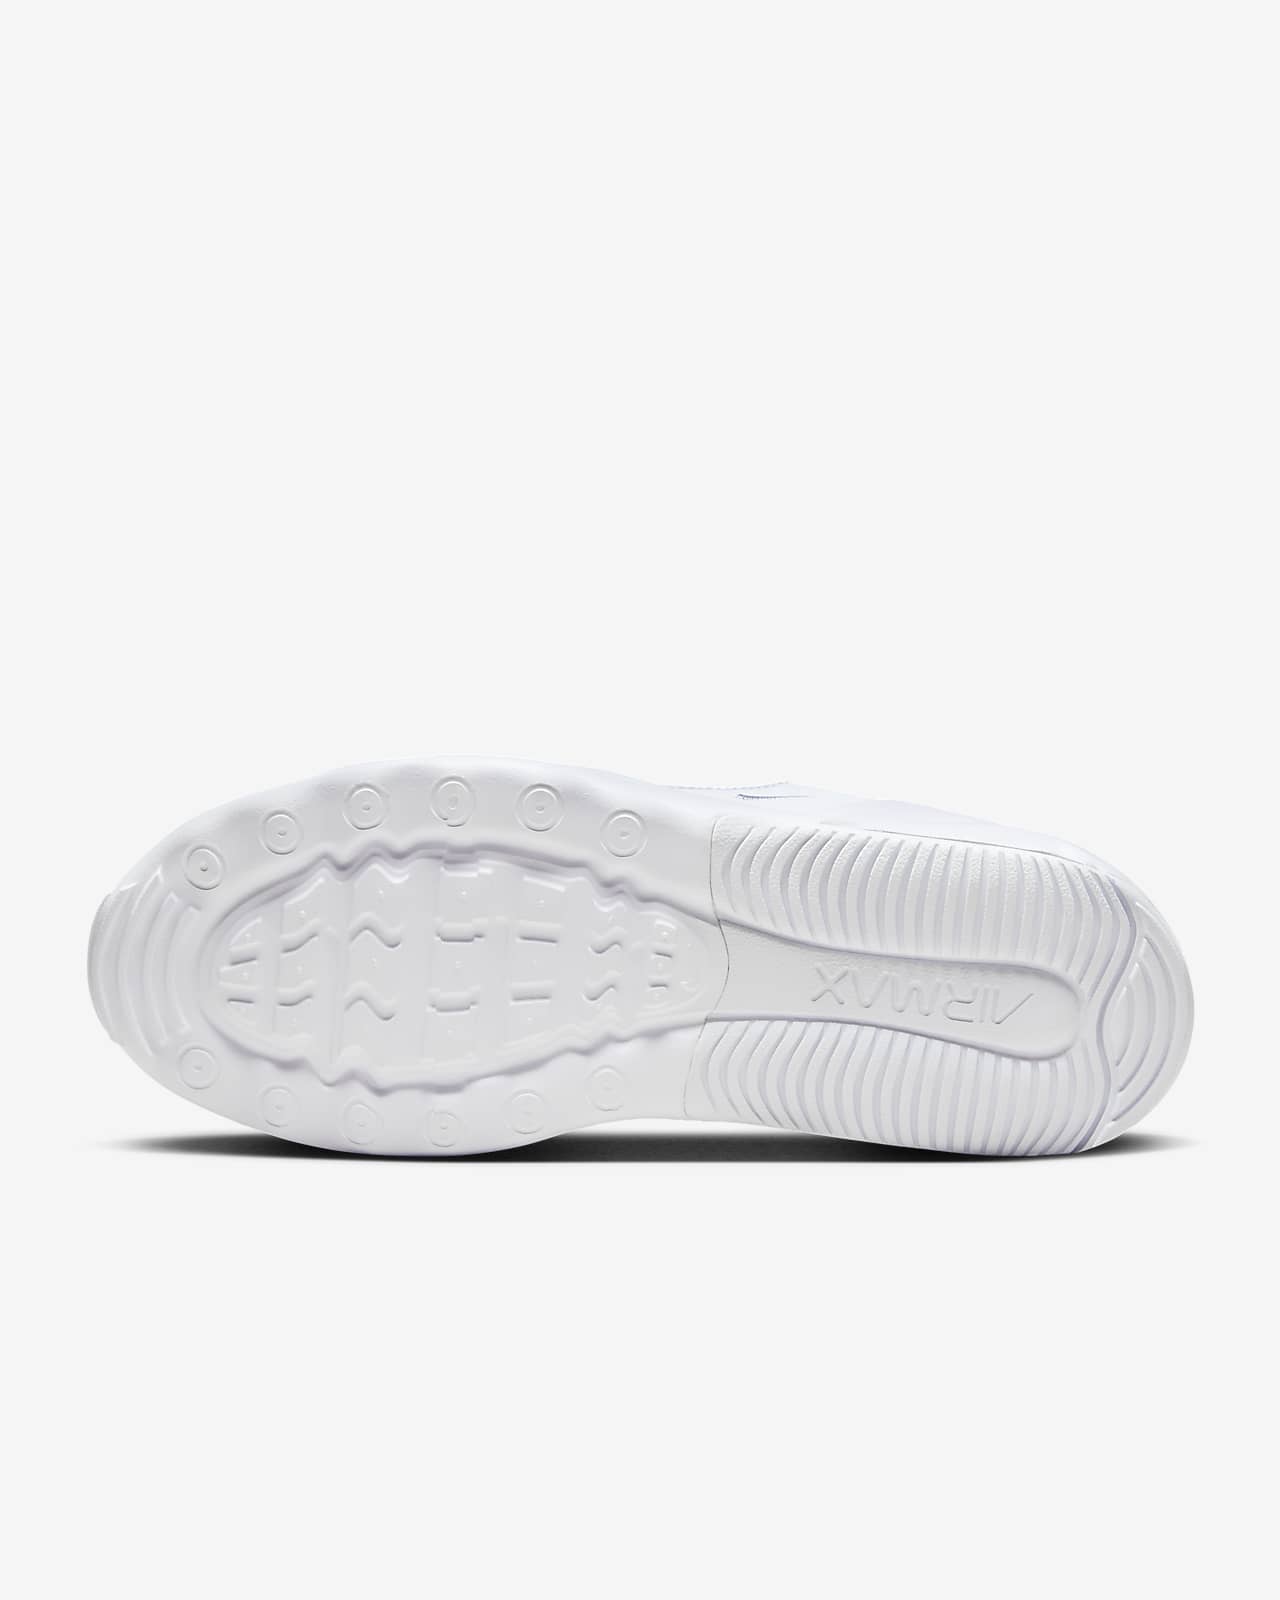 Nike Homme Air Max Bolt Men's Shoe, White/Black-White, 42.5 EU